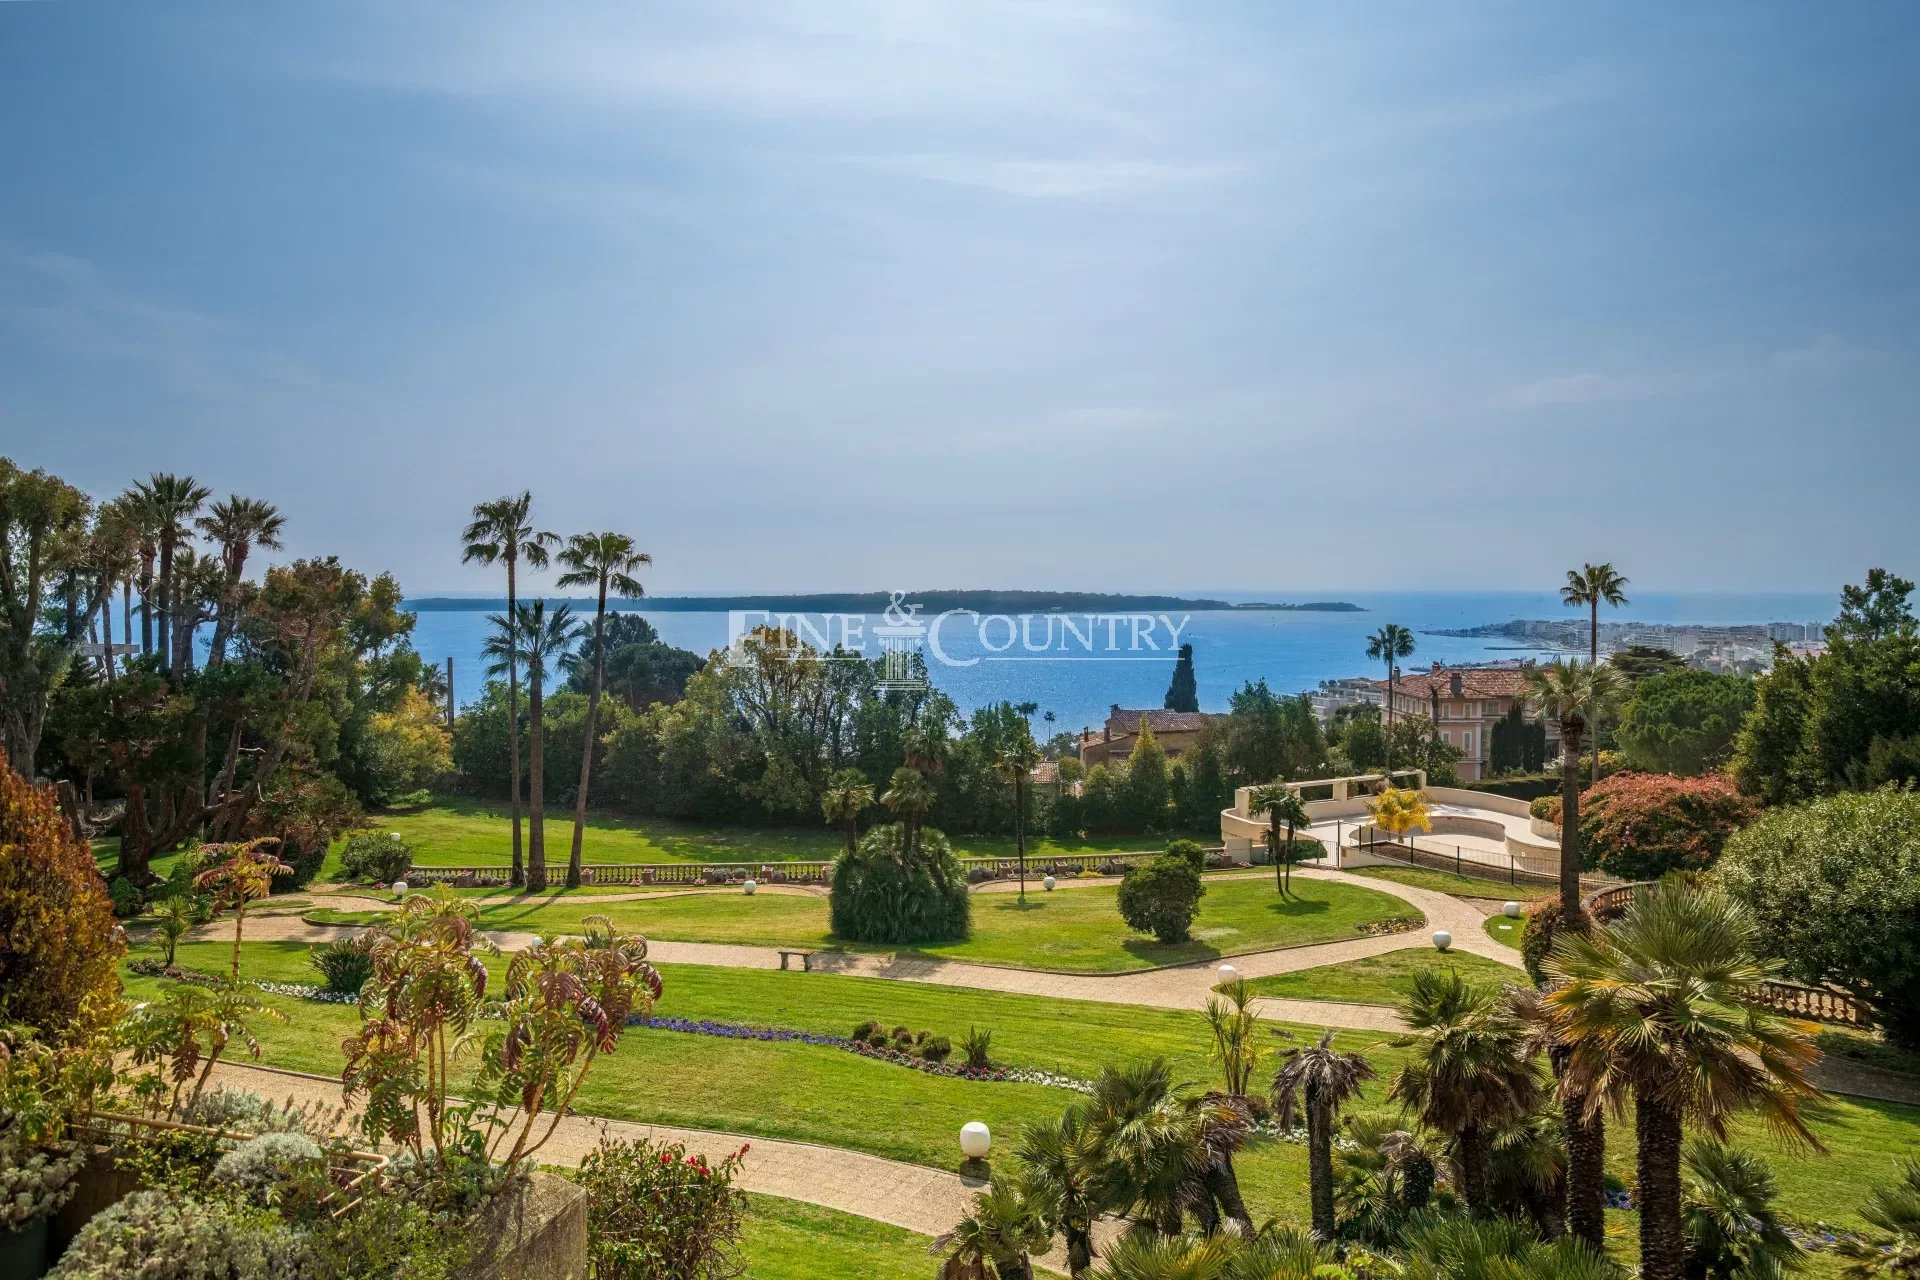 Luxury Sea View Apartment for sale in La Californie, Cannes